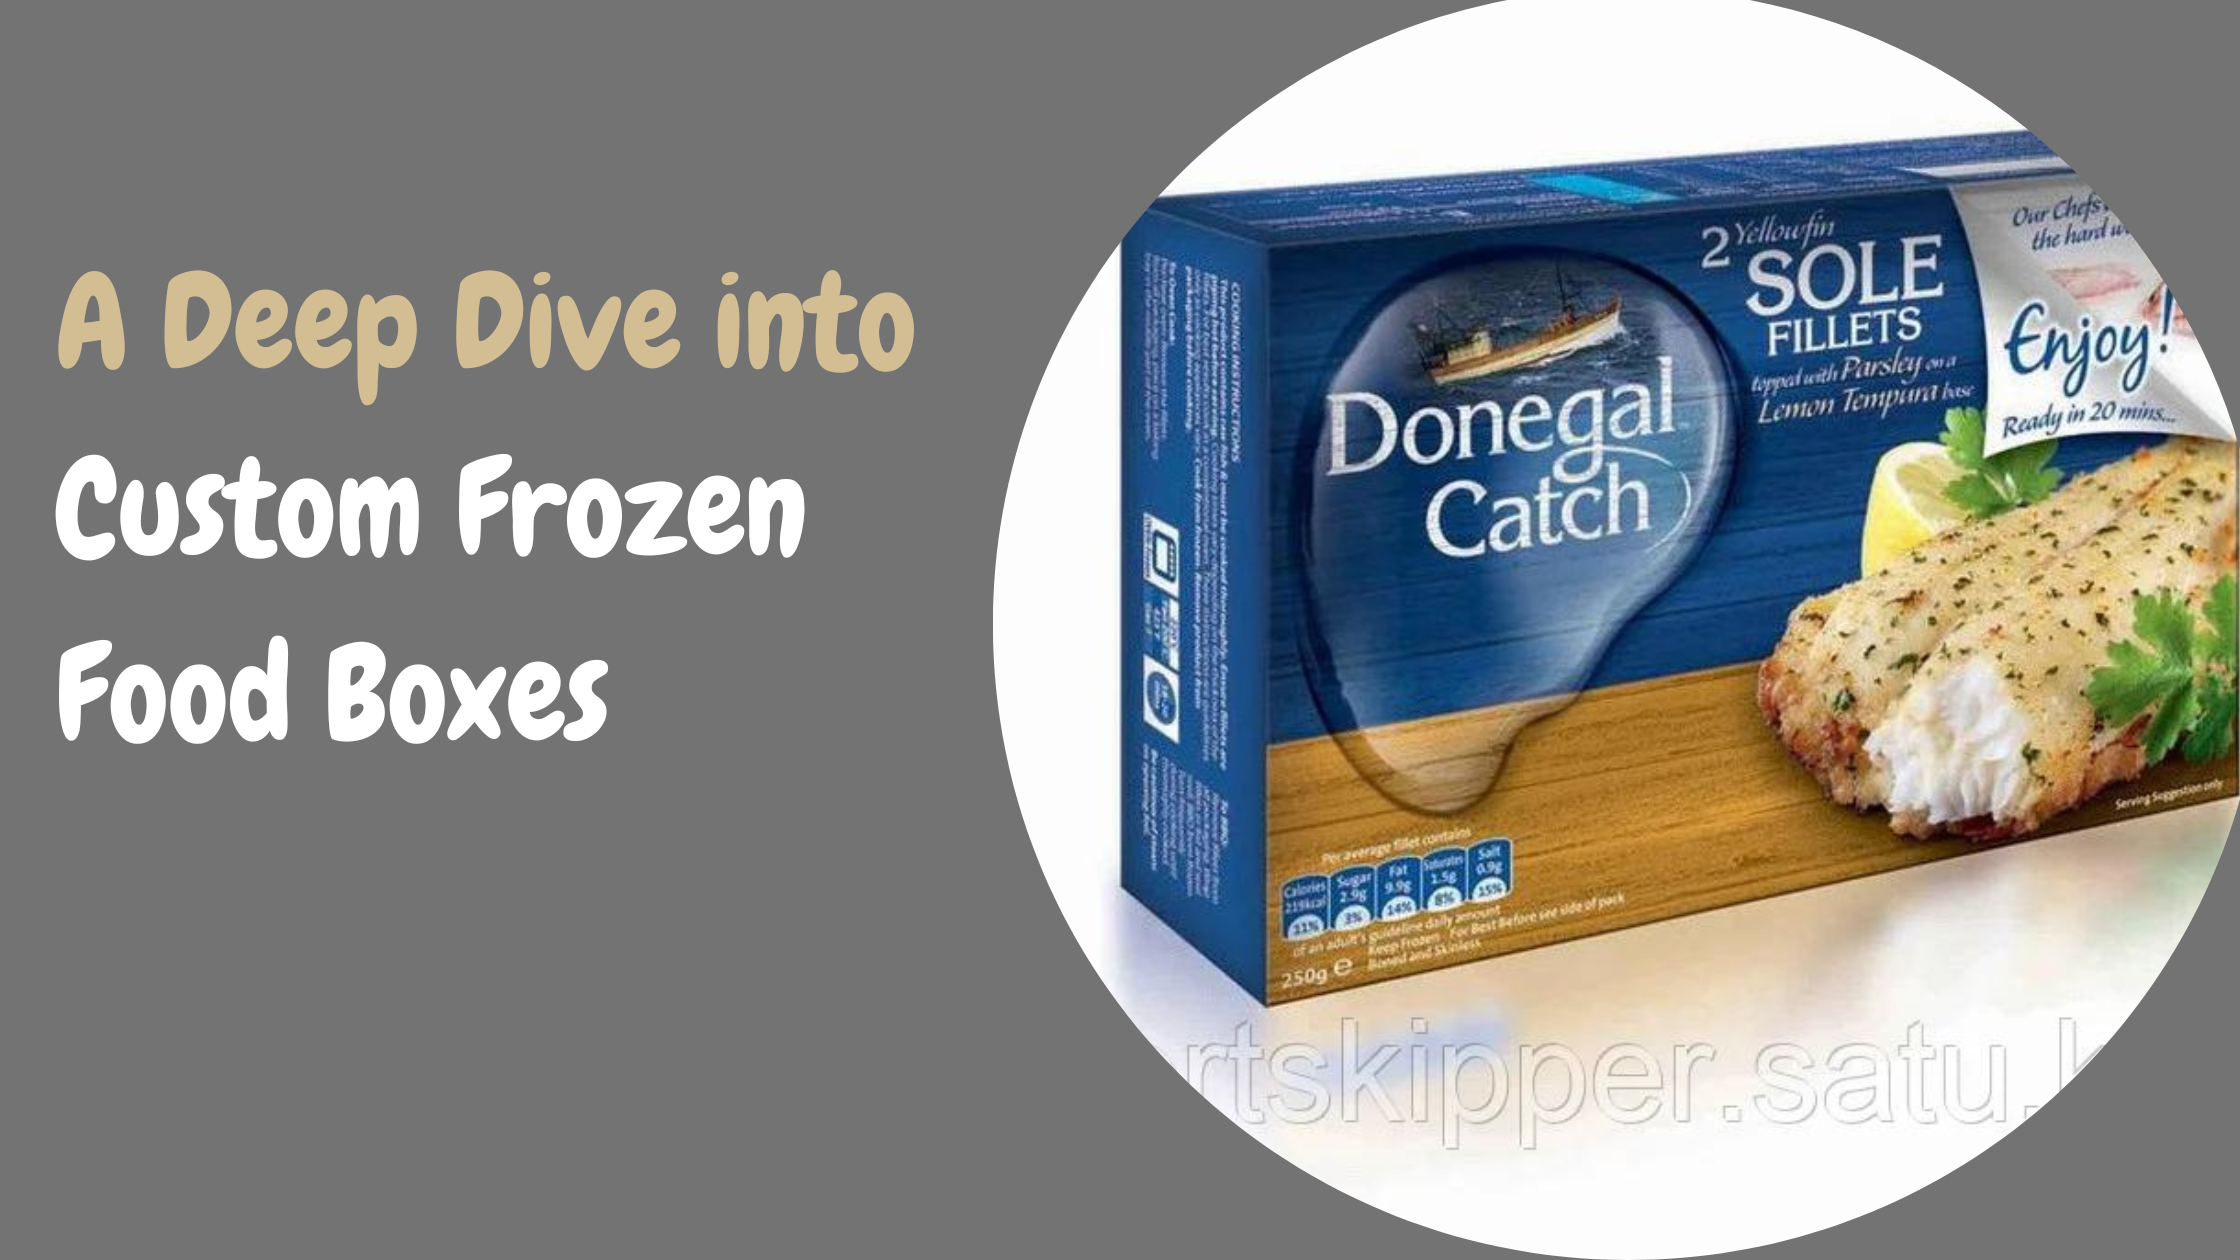 A Deep Dive into Custom Frozen Food Boxes